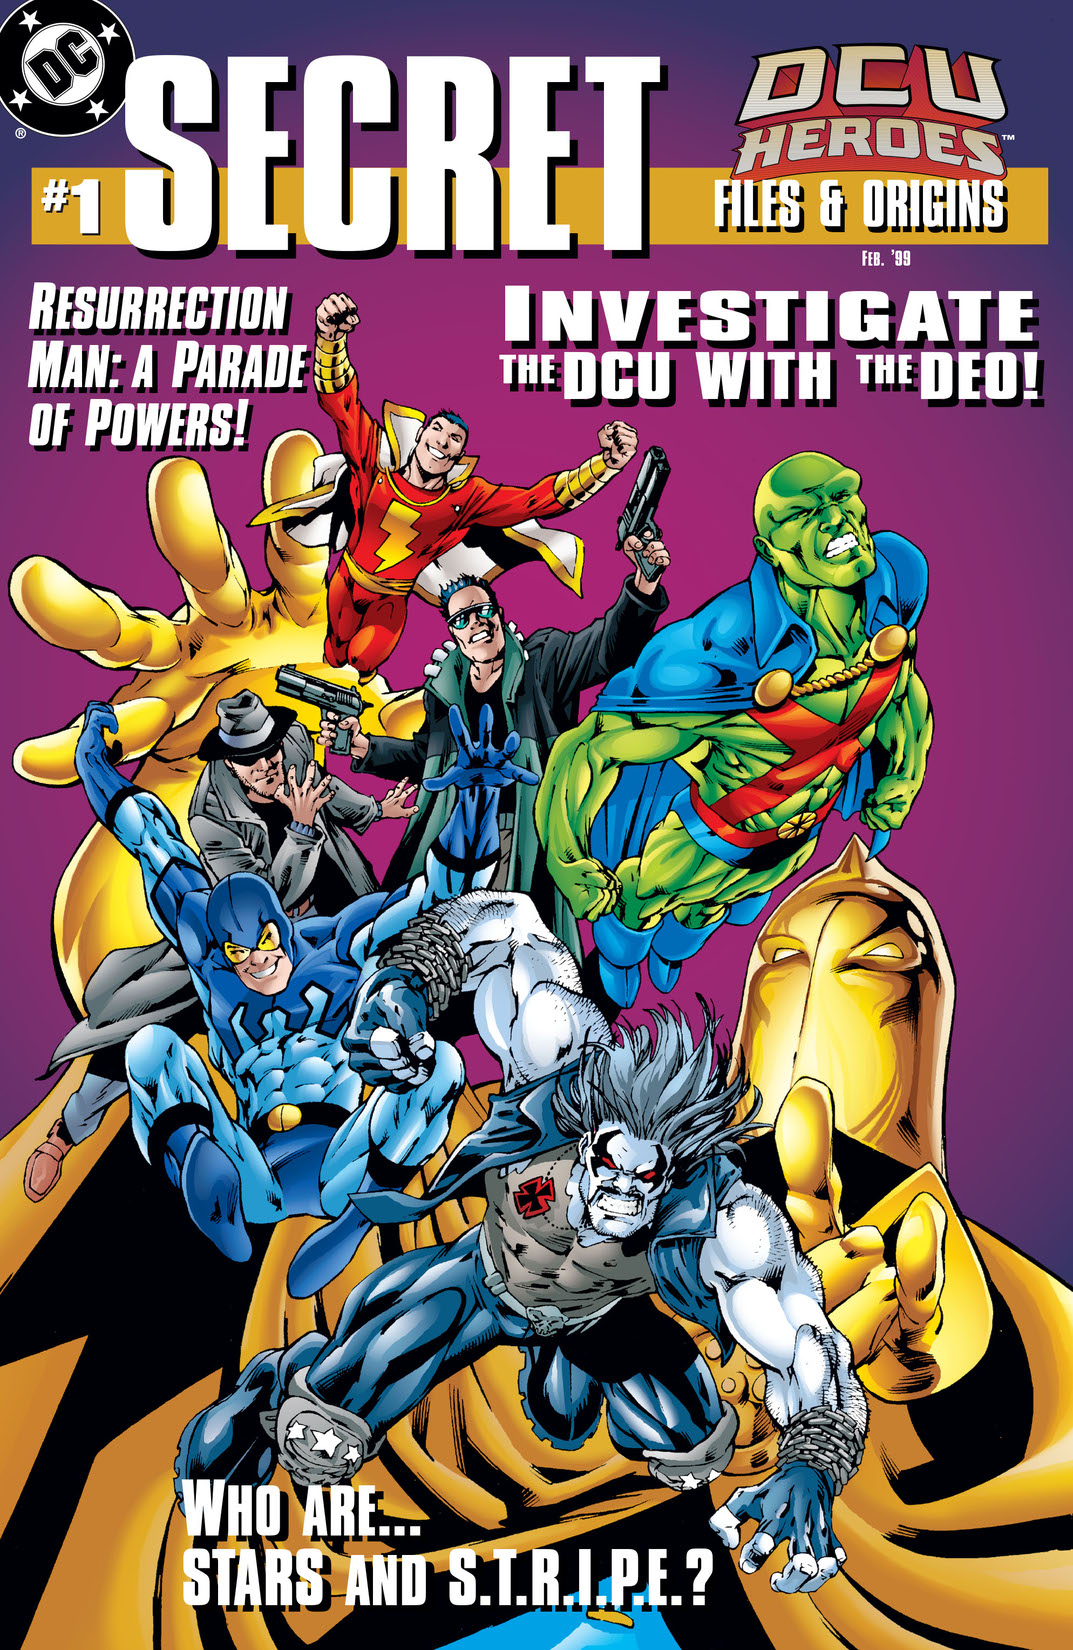 DCU Heroes Secret Files #1 preview images